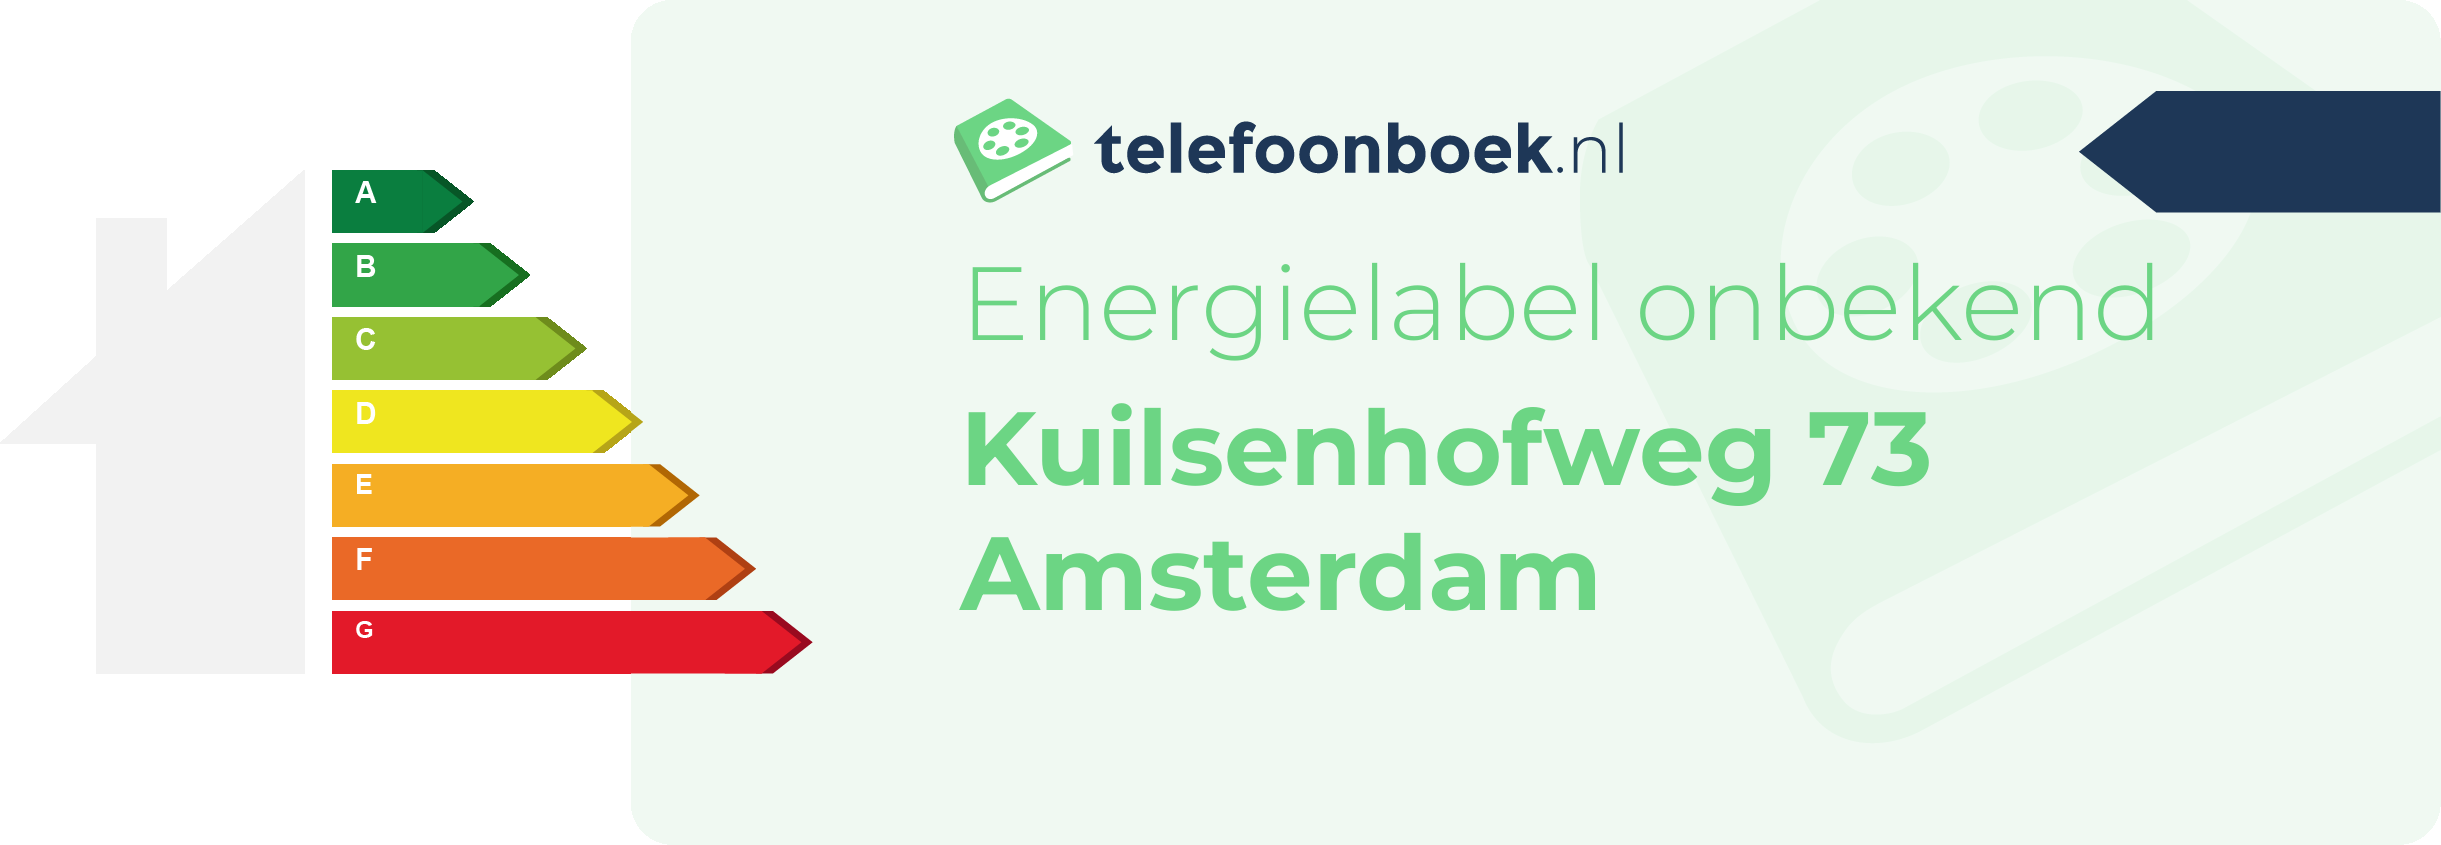 Energielabel Kuilsenhofweg 73 Amsterdam